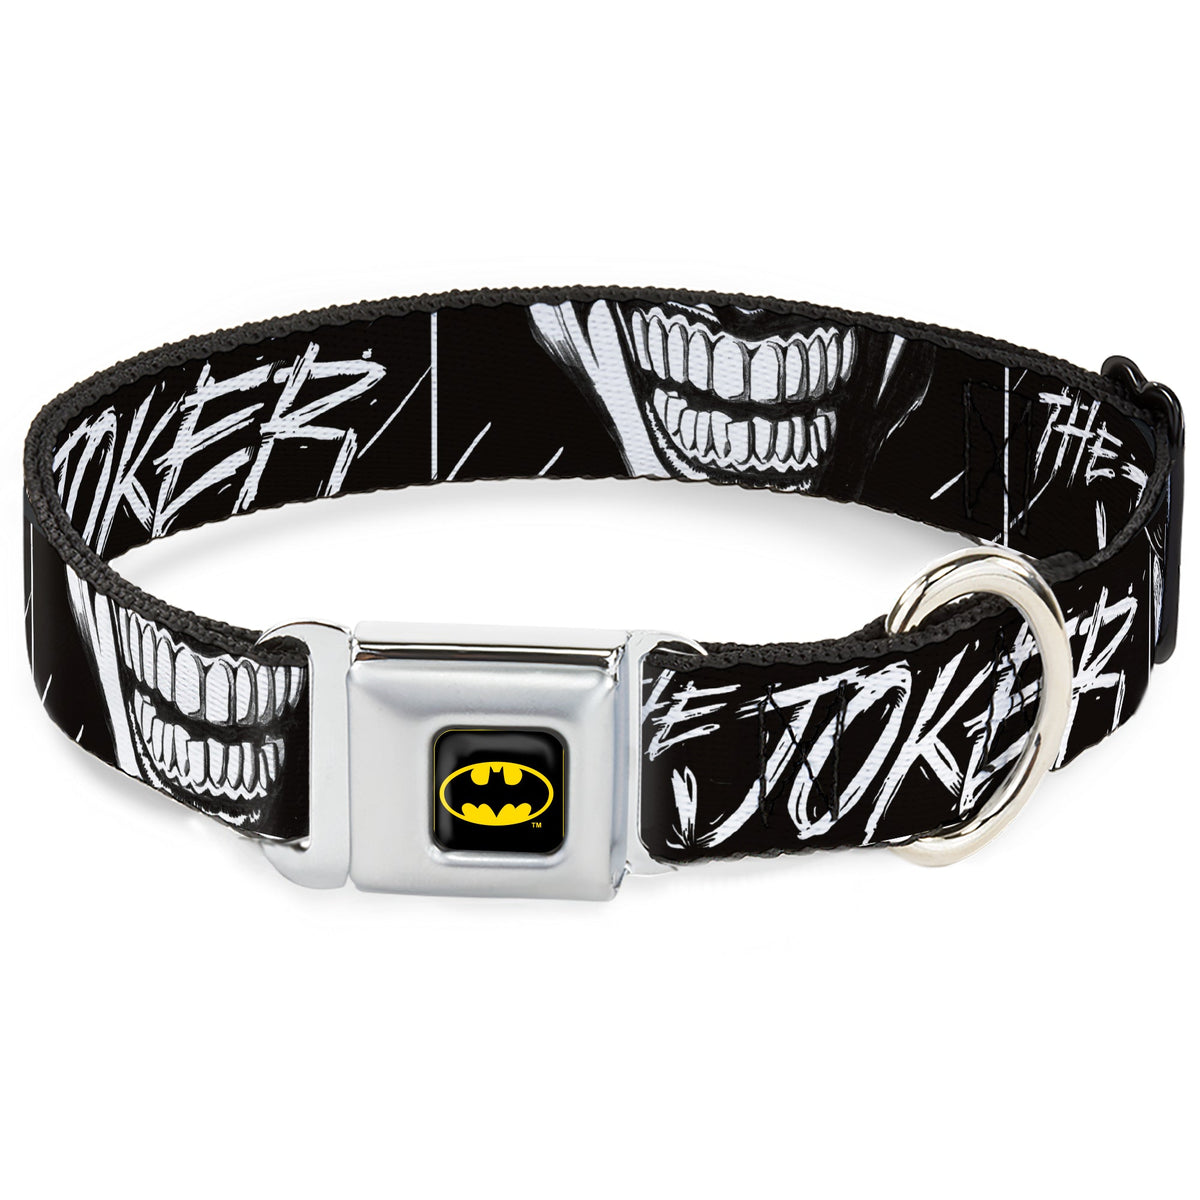 Batman Black/Yellow Seatbelt Buckle Collar - THE JOKER Smiling Eyes Sketch Close-Up Black/White